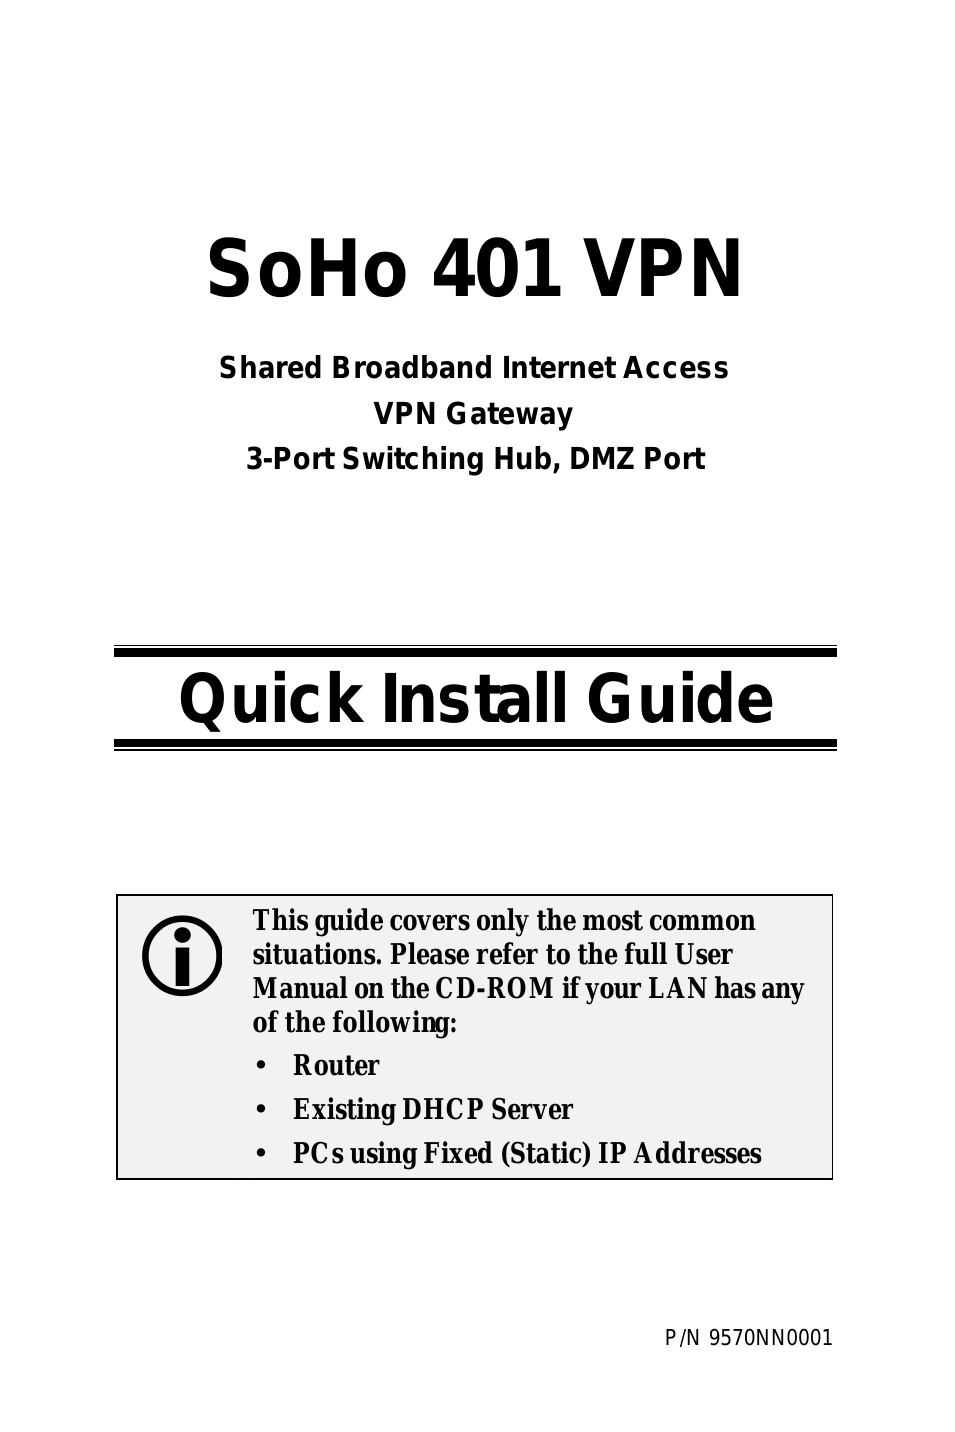 Firewall VPN SoHo 401 VPN